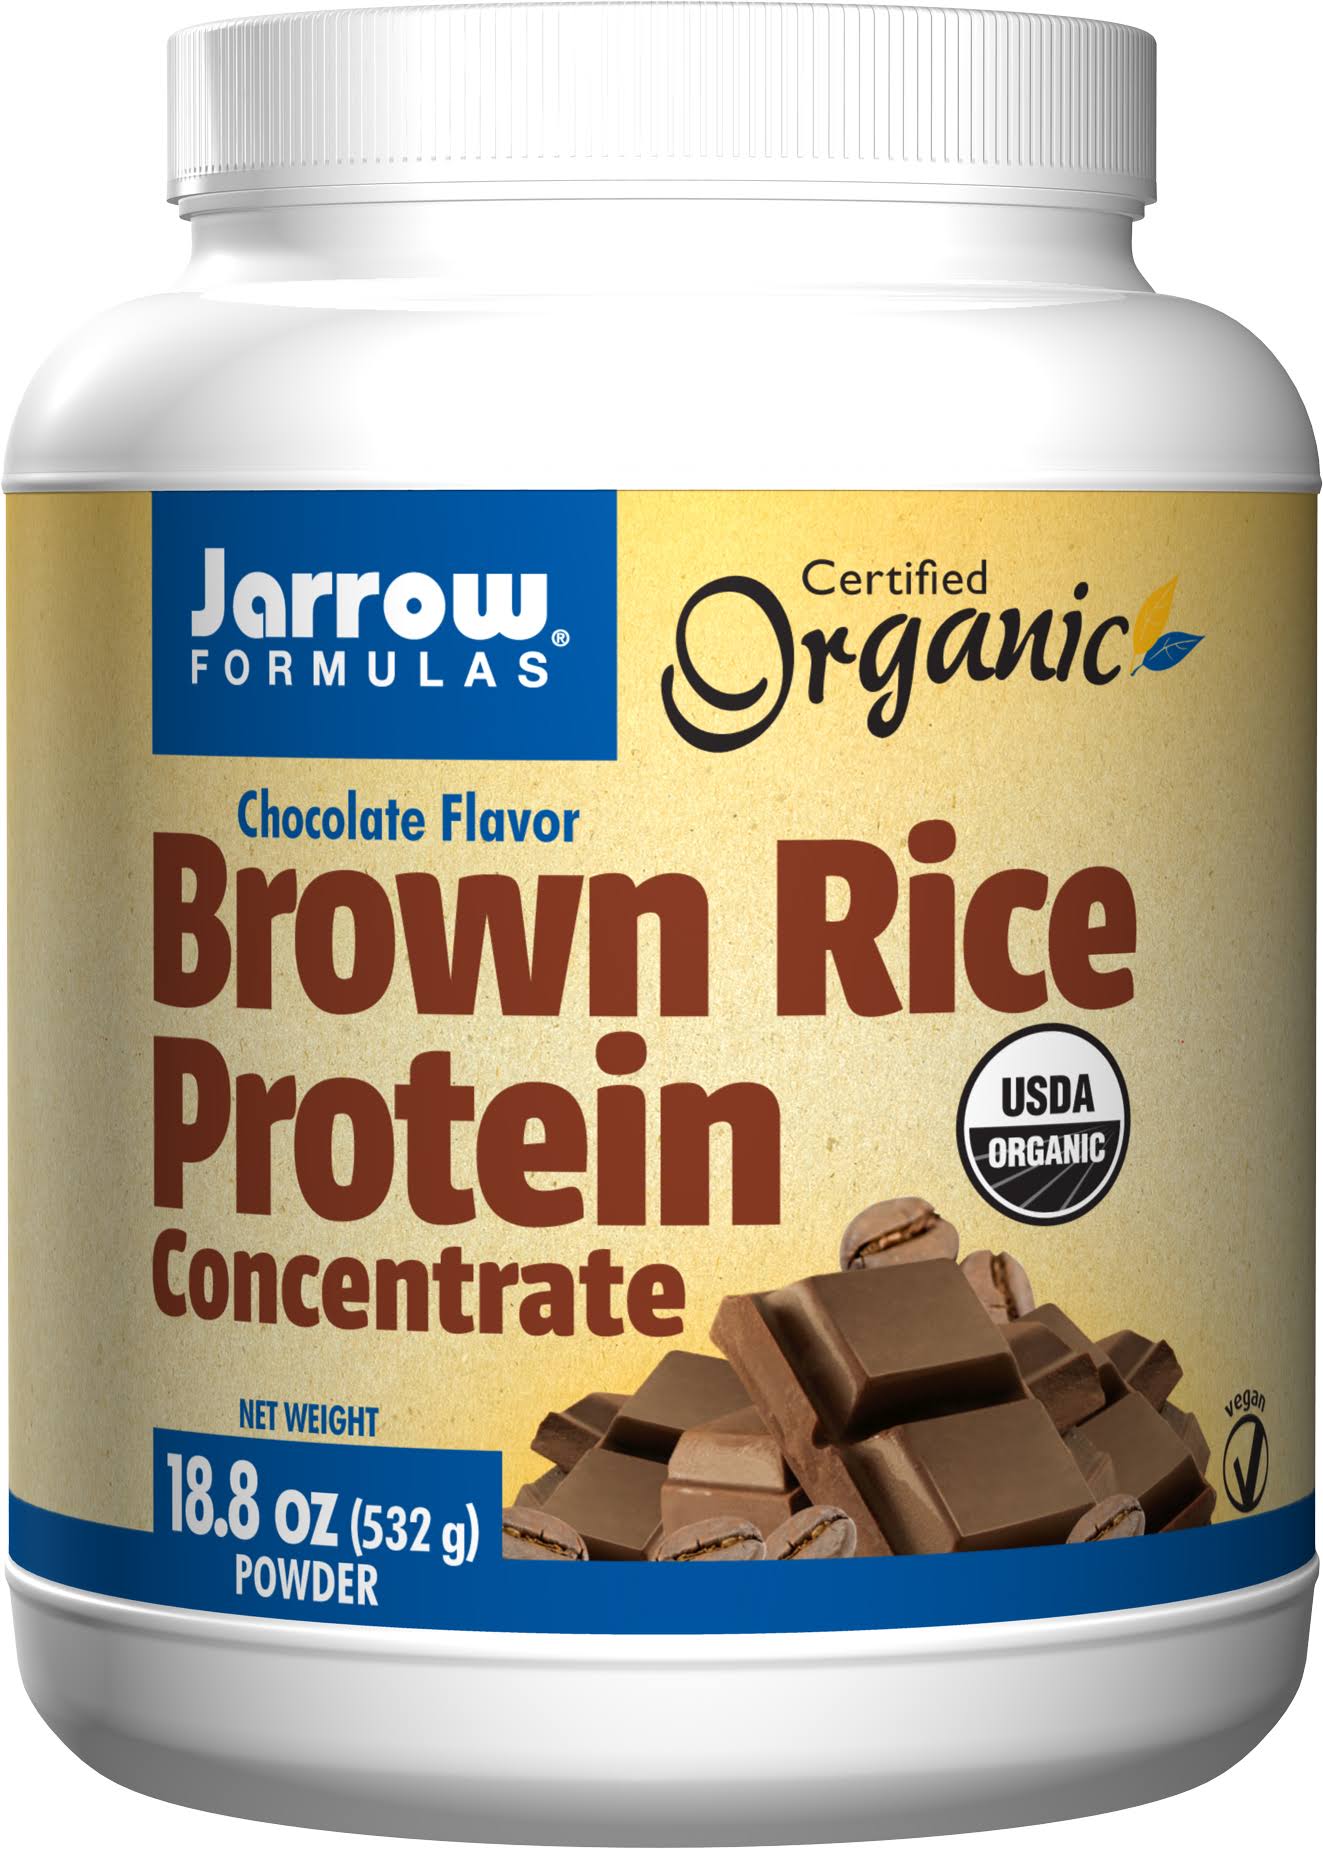 Jarrow Formulas Brown Rice Protein Sports Nutrition - Chocolate Flavor, 18.8oz